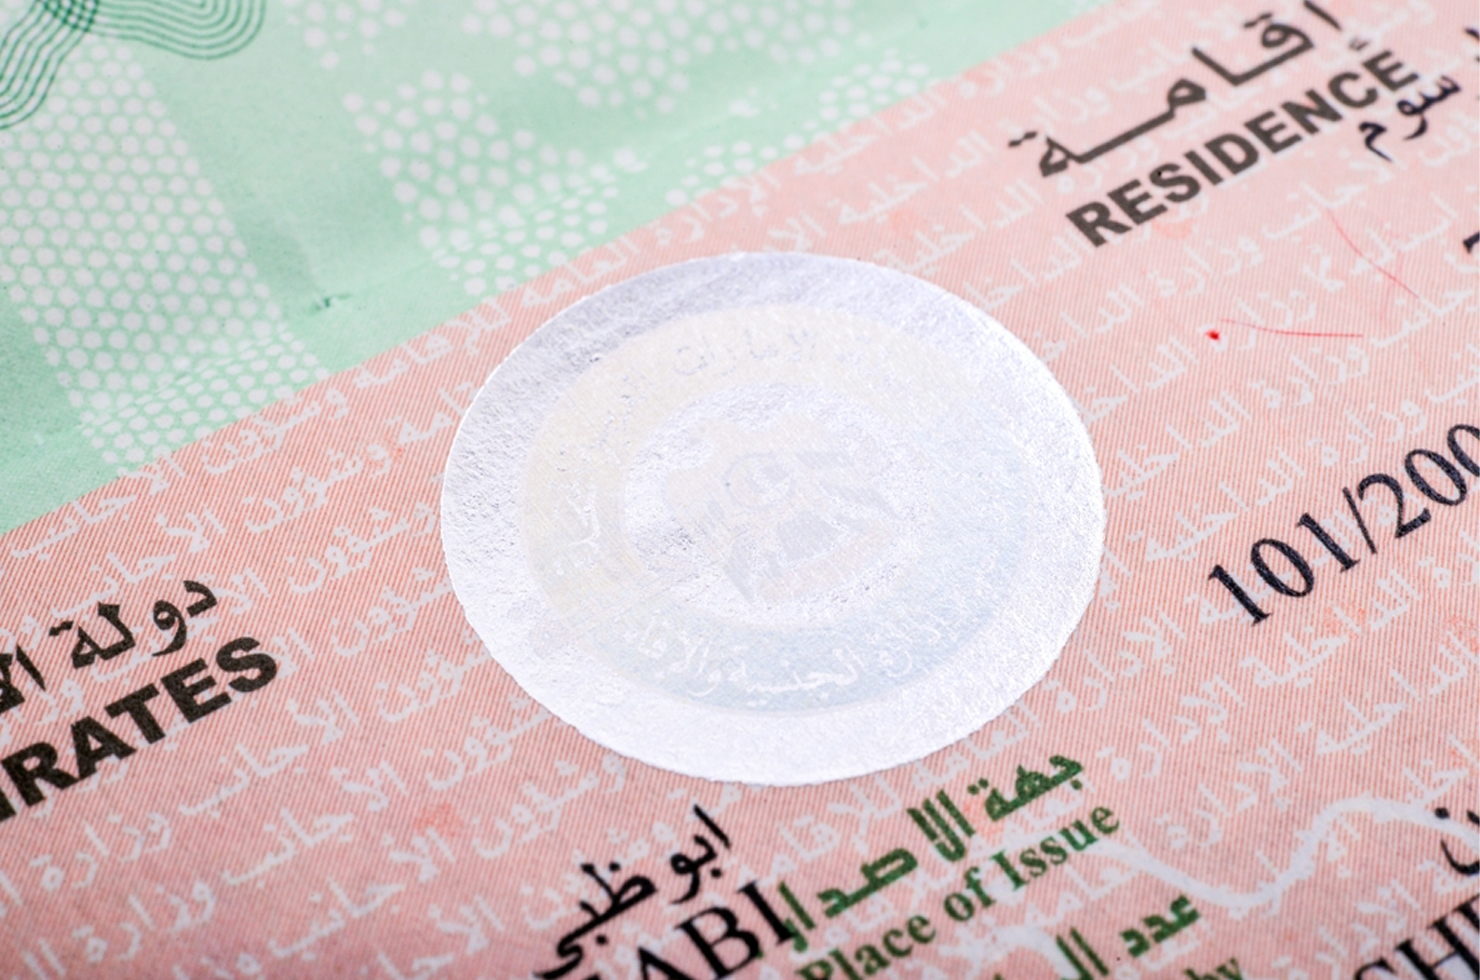 UAE's Golden Visa